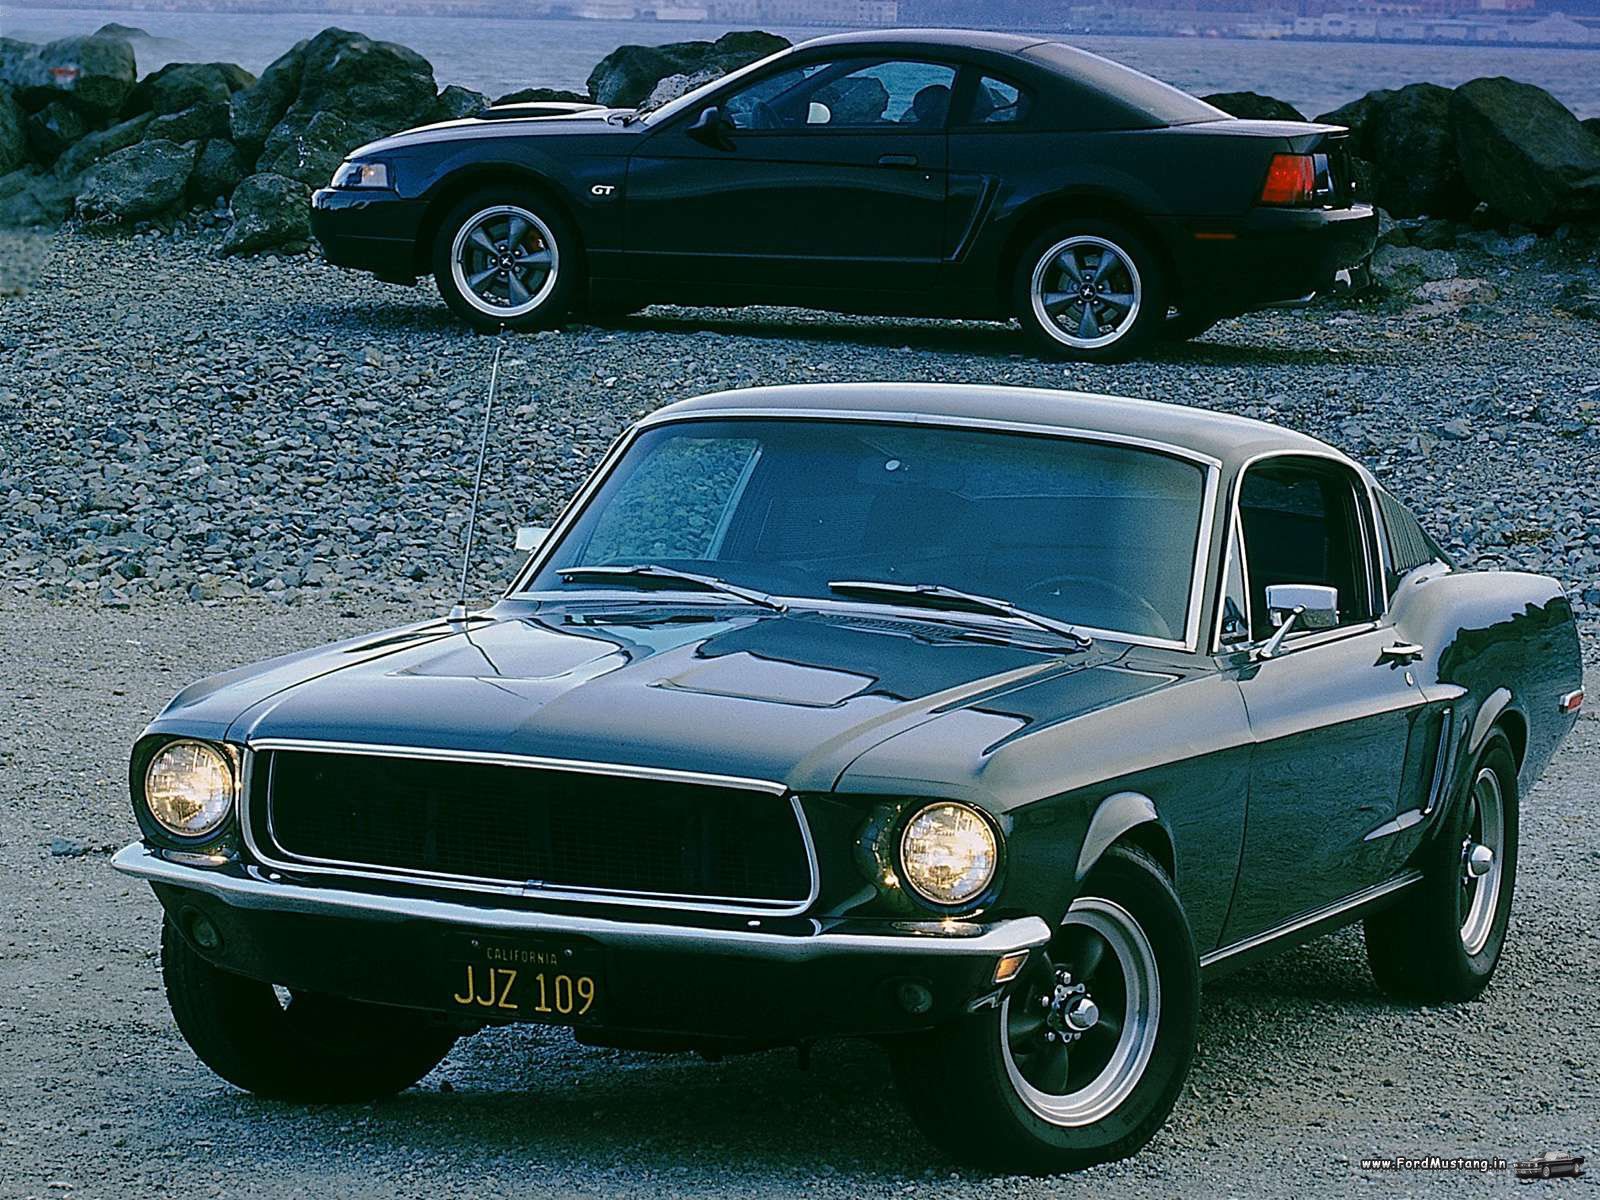 The 1968 Ford Mustang Bullitt & 2001 Bullitt in a photoshoot for the unveiling of the model